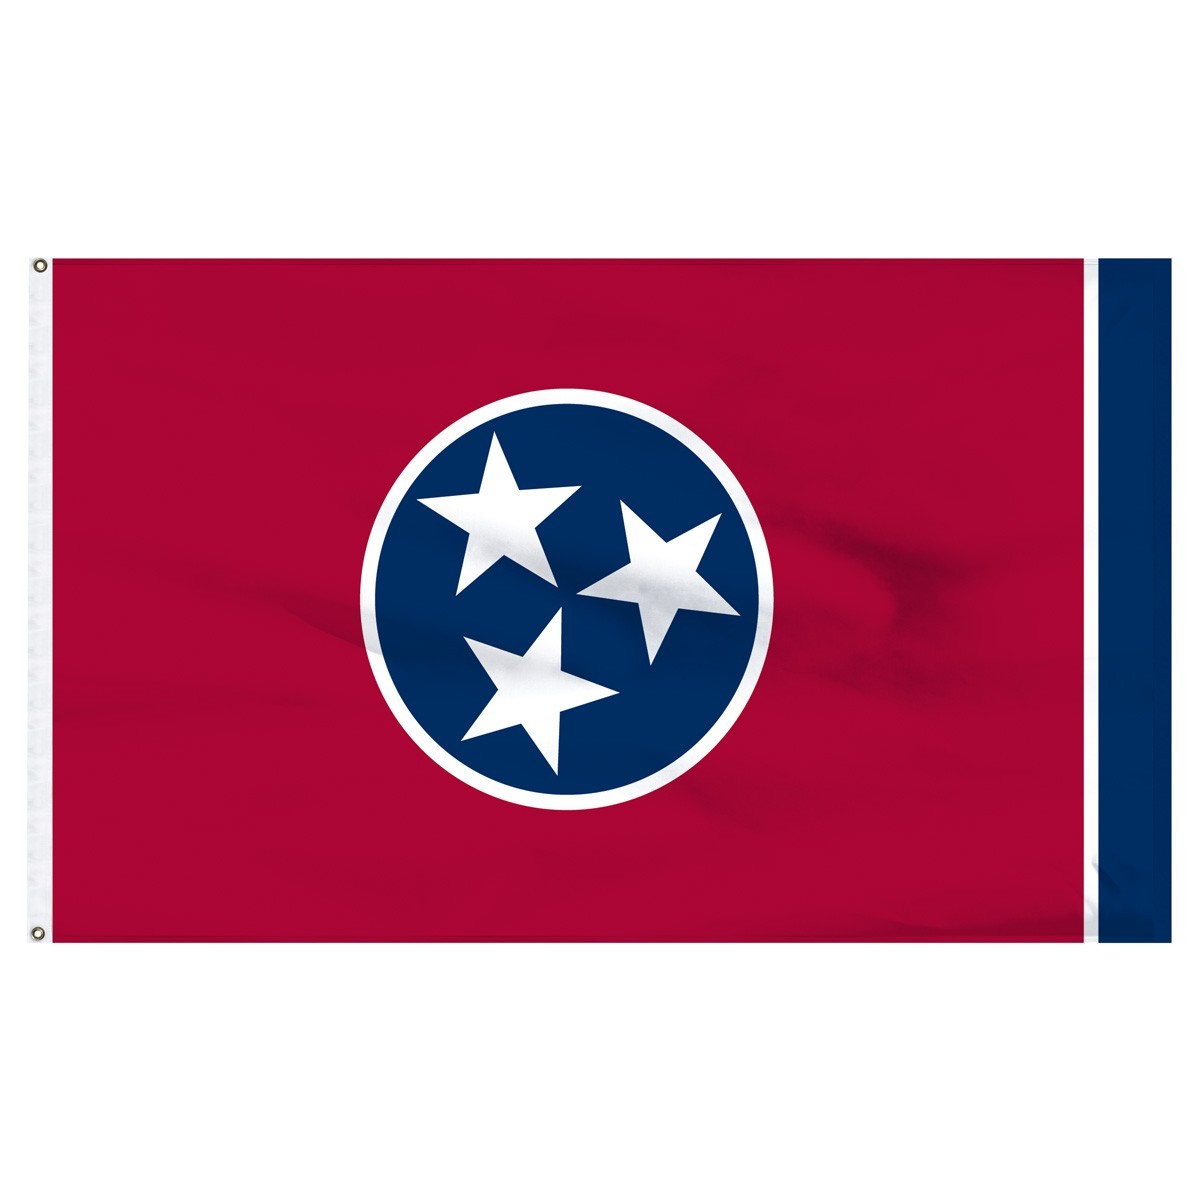 Bandera de nailon para exteriores de Tennessee de 2 pies x 3 pies